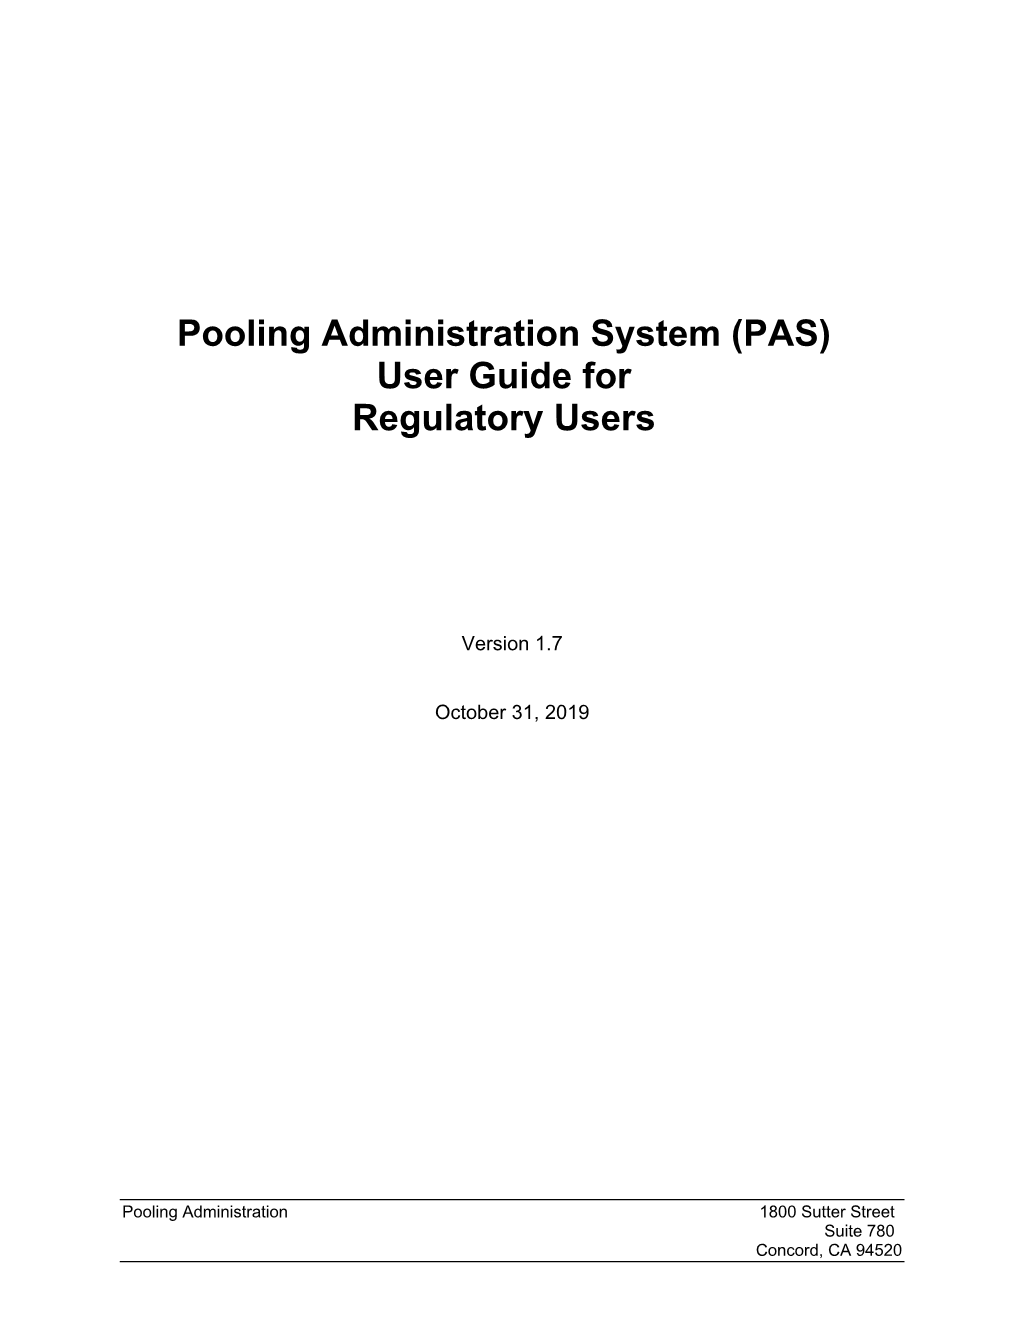 2019 10 31 PAS Regulatory User Guide